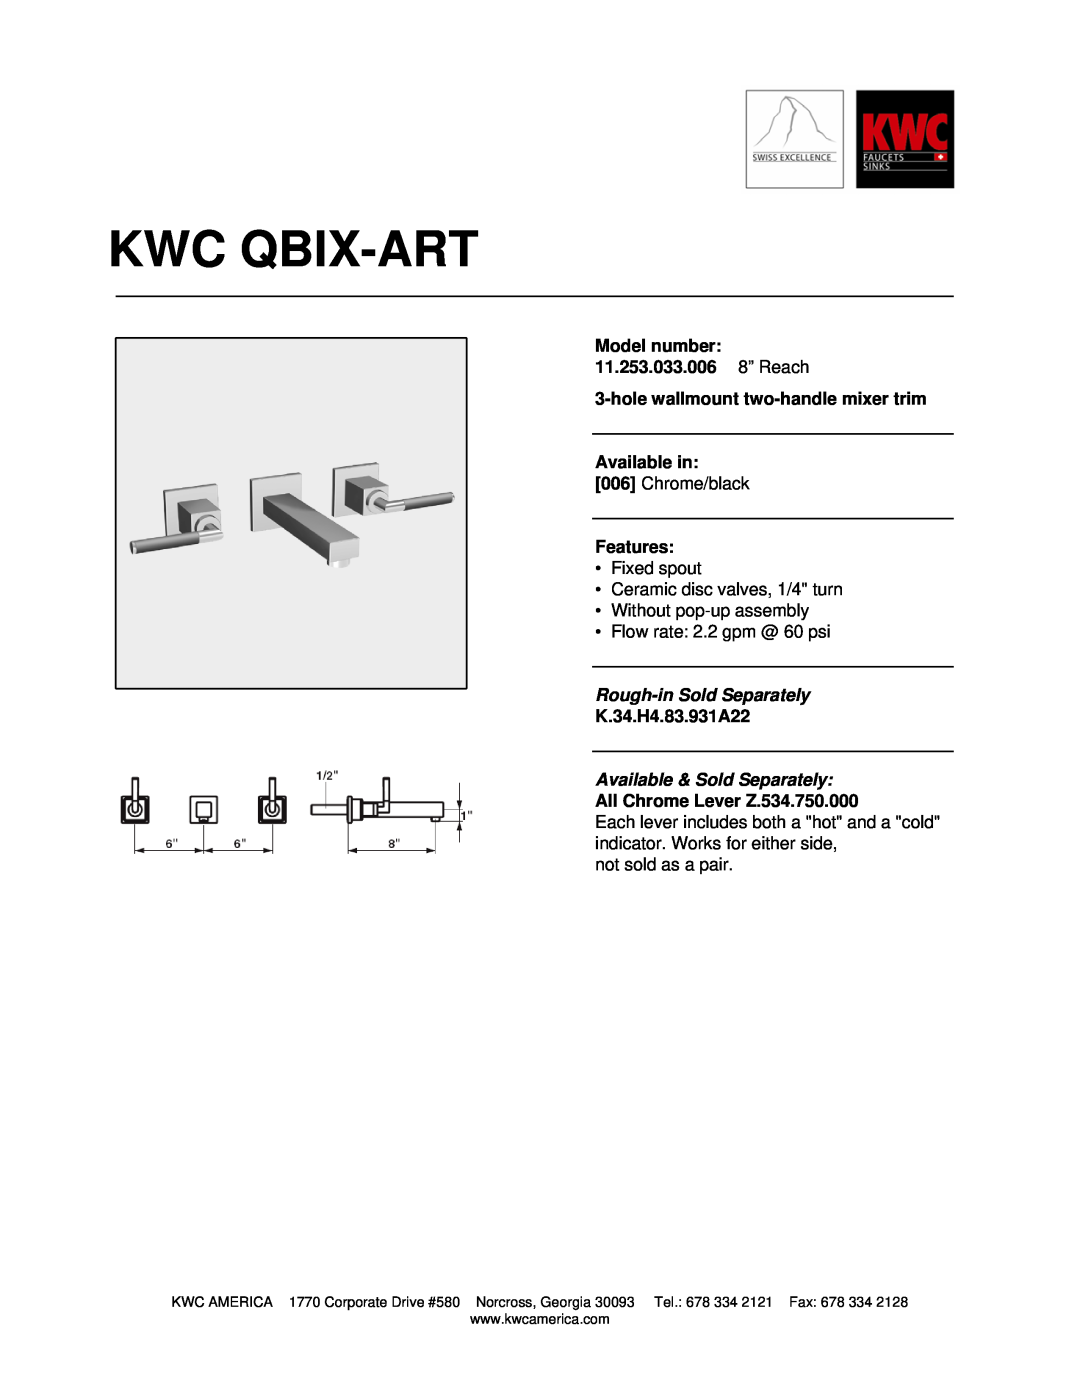 KWC manual Kwc Qbix-Art, Model number 11.253.033.006 8” Reach, holewallmount two-handlemixer trim Available in 